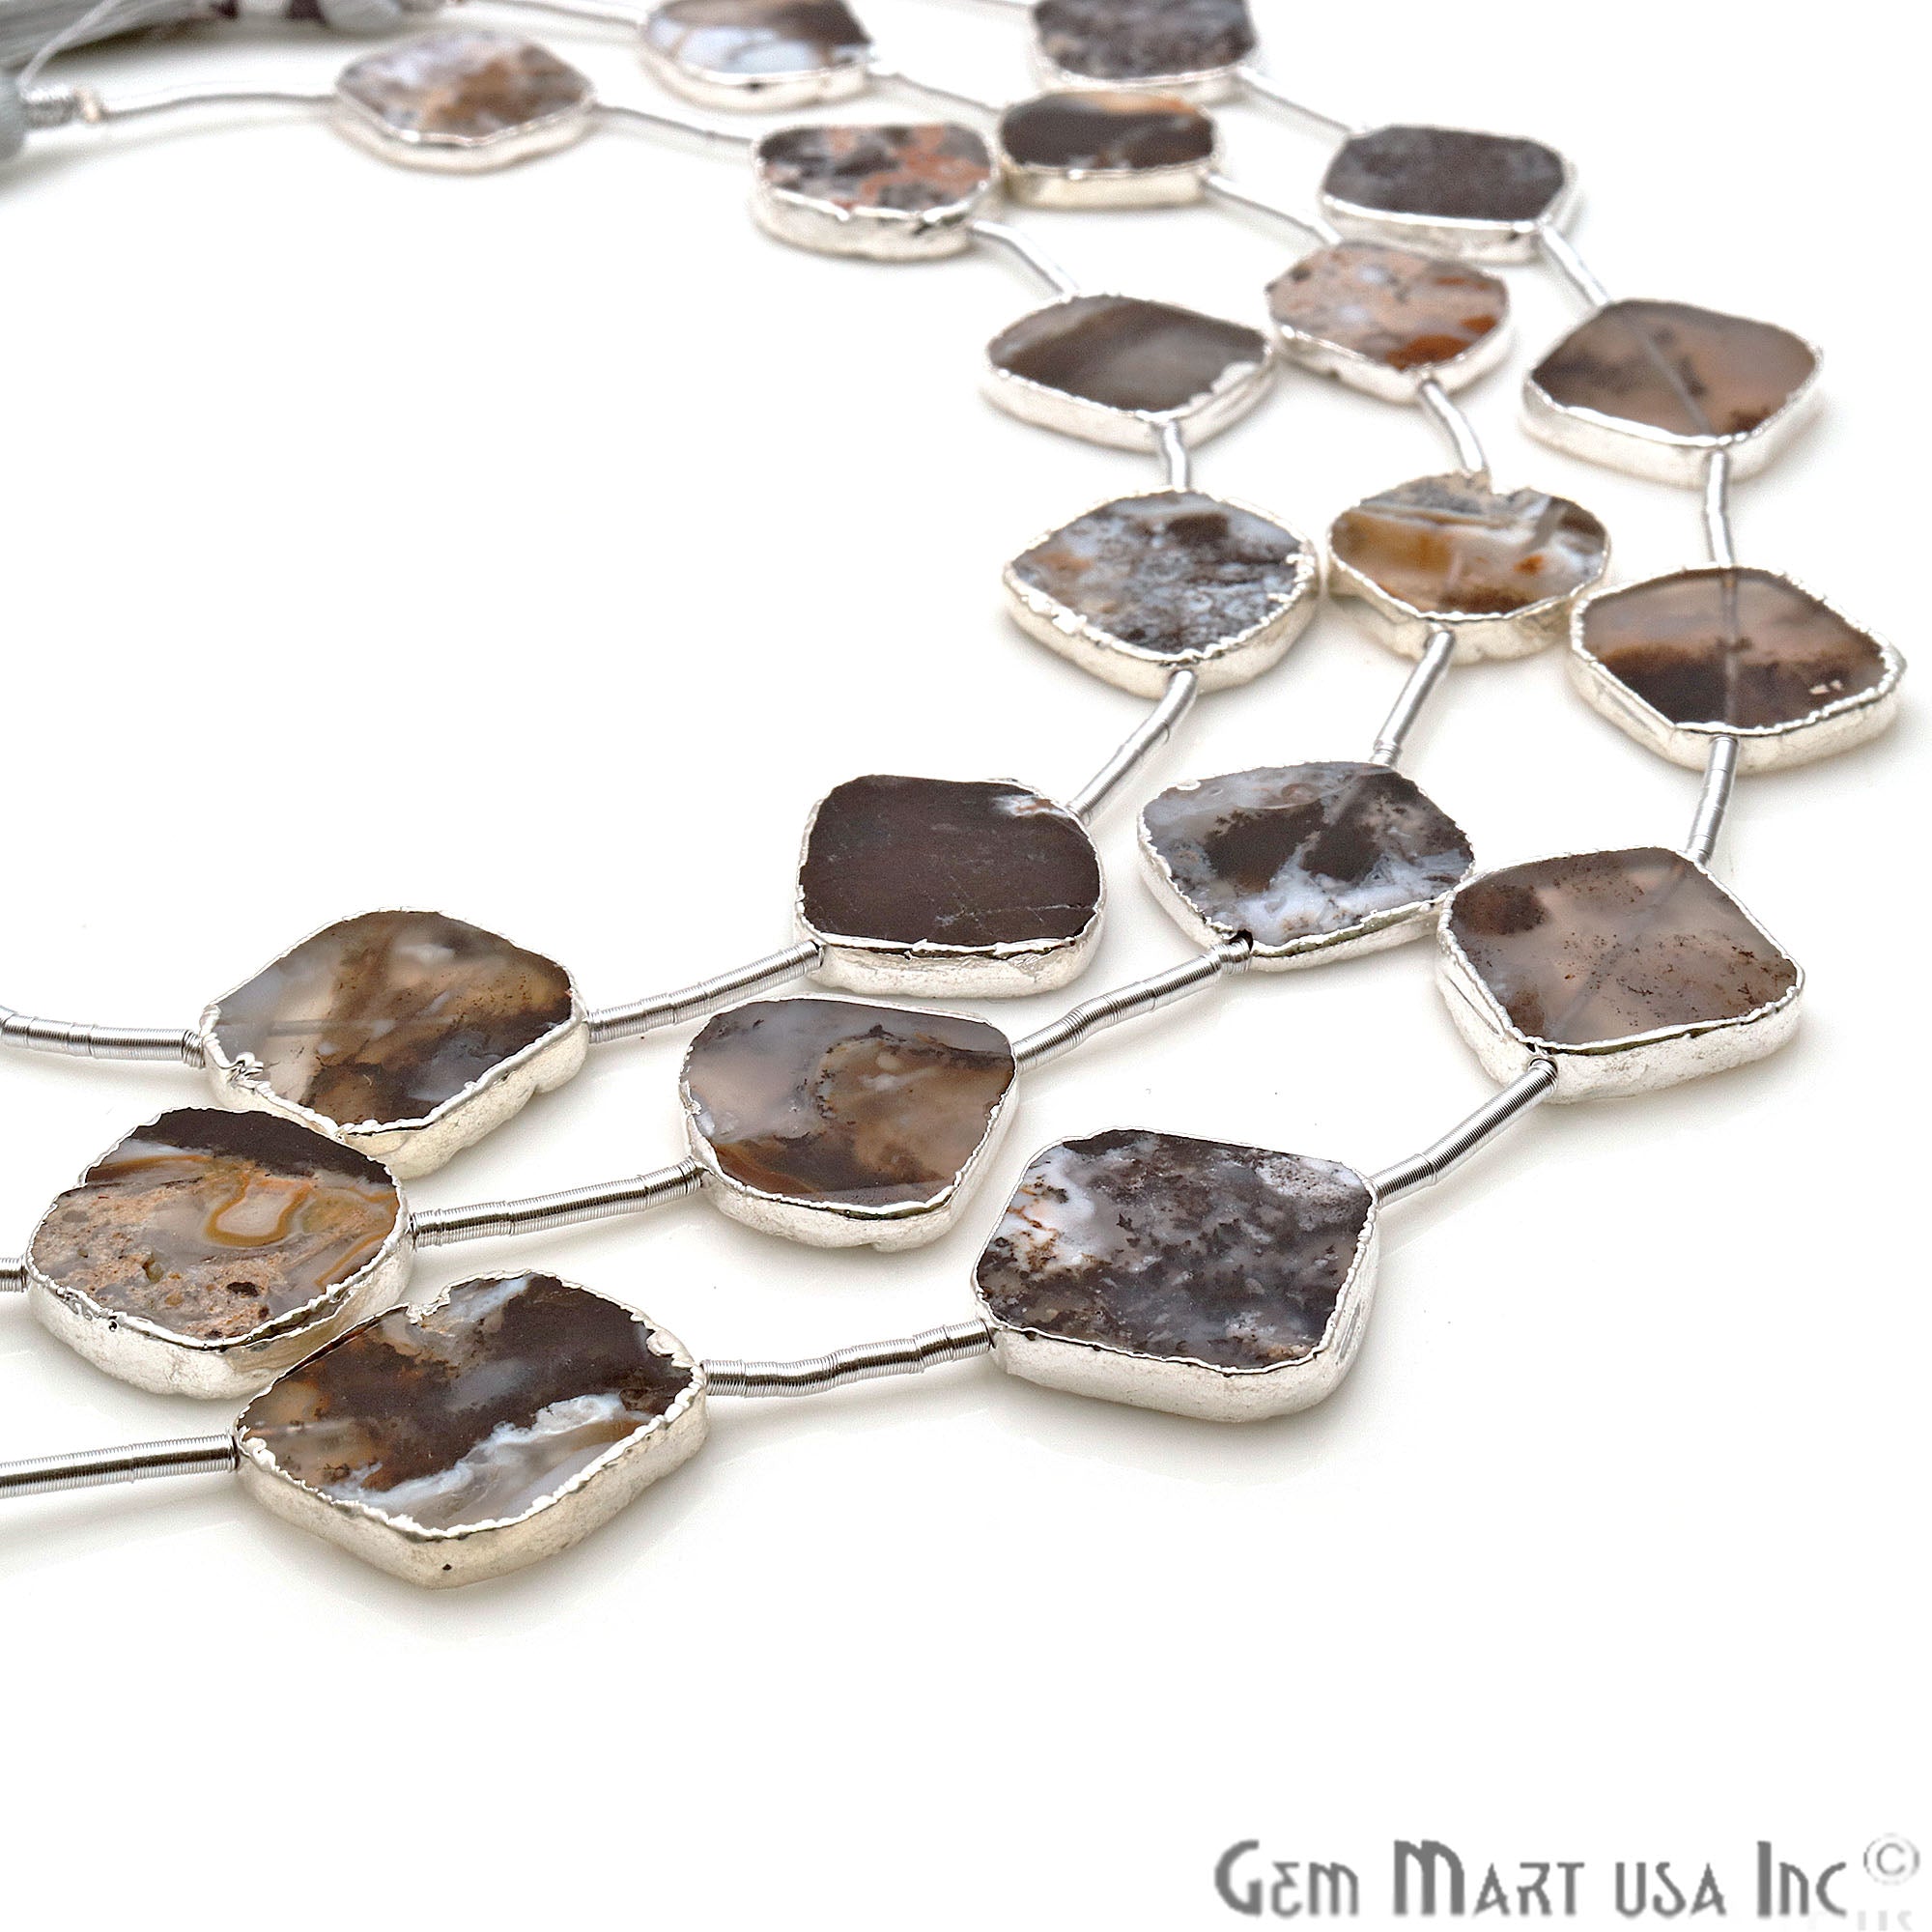 Dendrite Opal Free Form 18x15mm Silver Edged Crafting Beads Gemstone Strands 9INCH - GemMartUSA